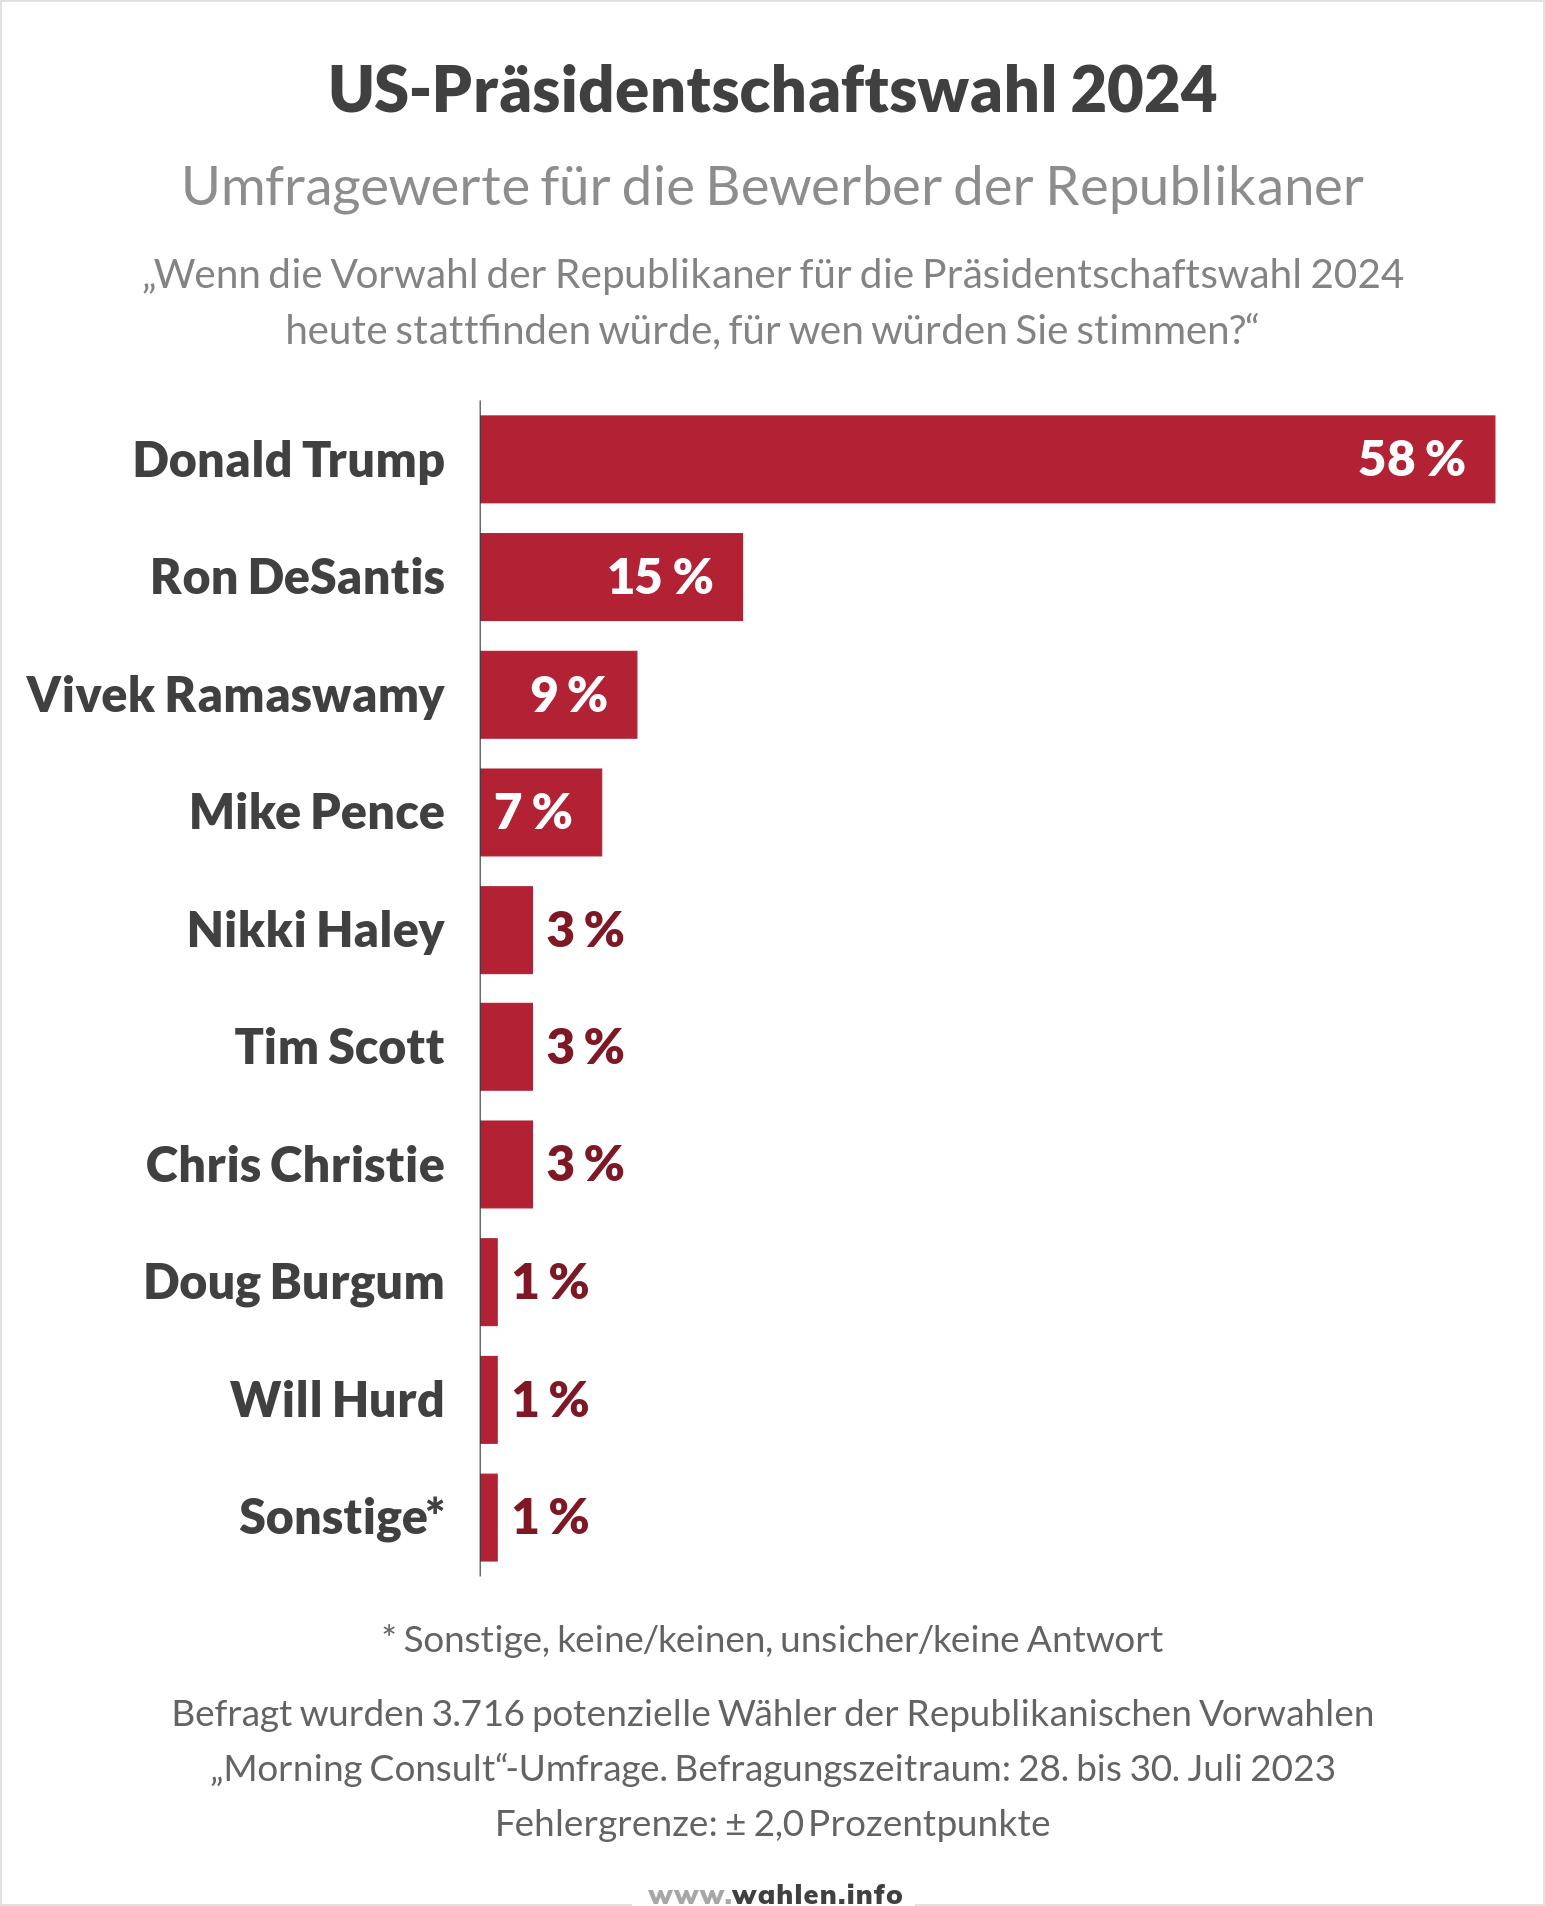 US-Wahl 2024 - Umfragen der Republikaner (Trump, DeSantis, Ramaswamy, Pence, Haley)